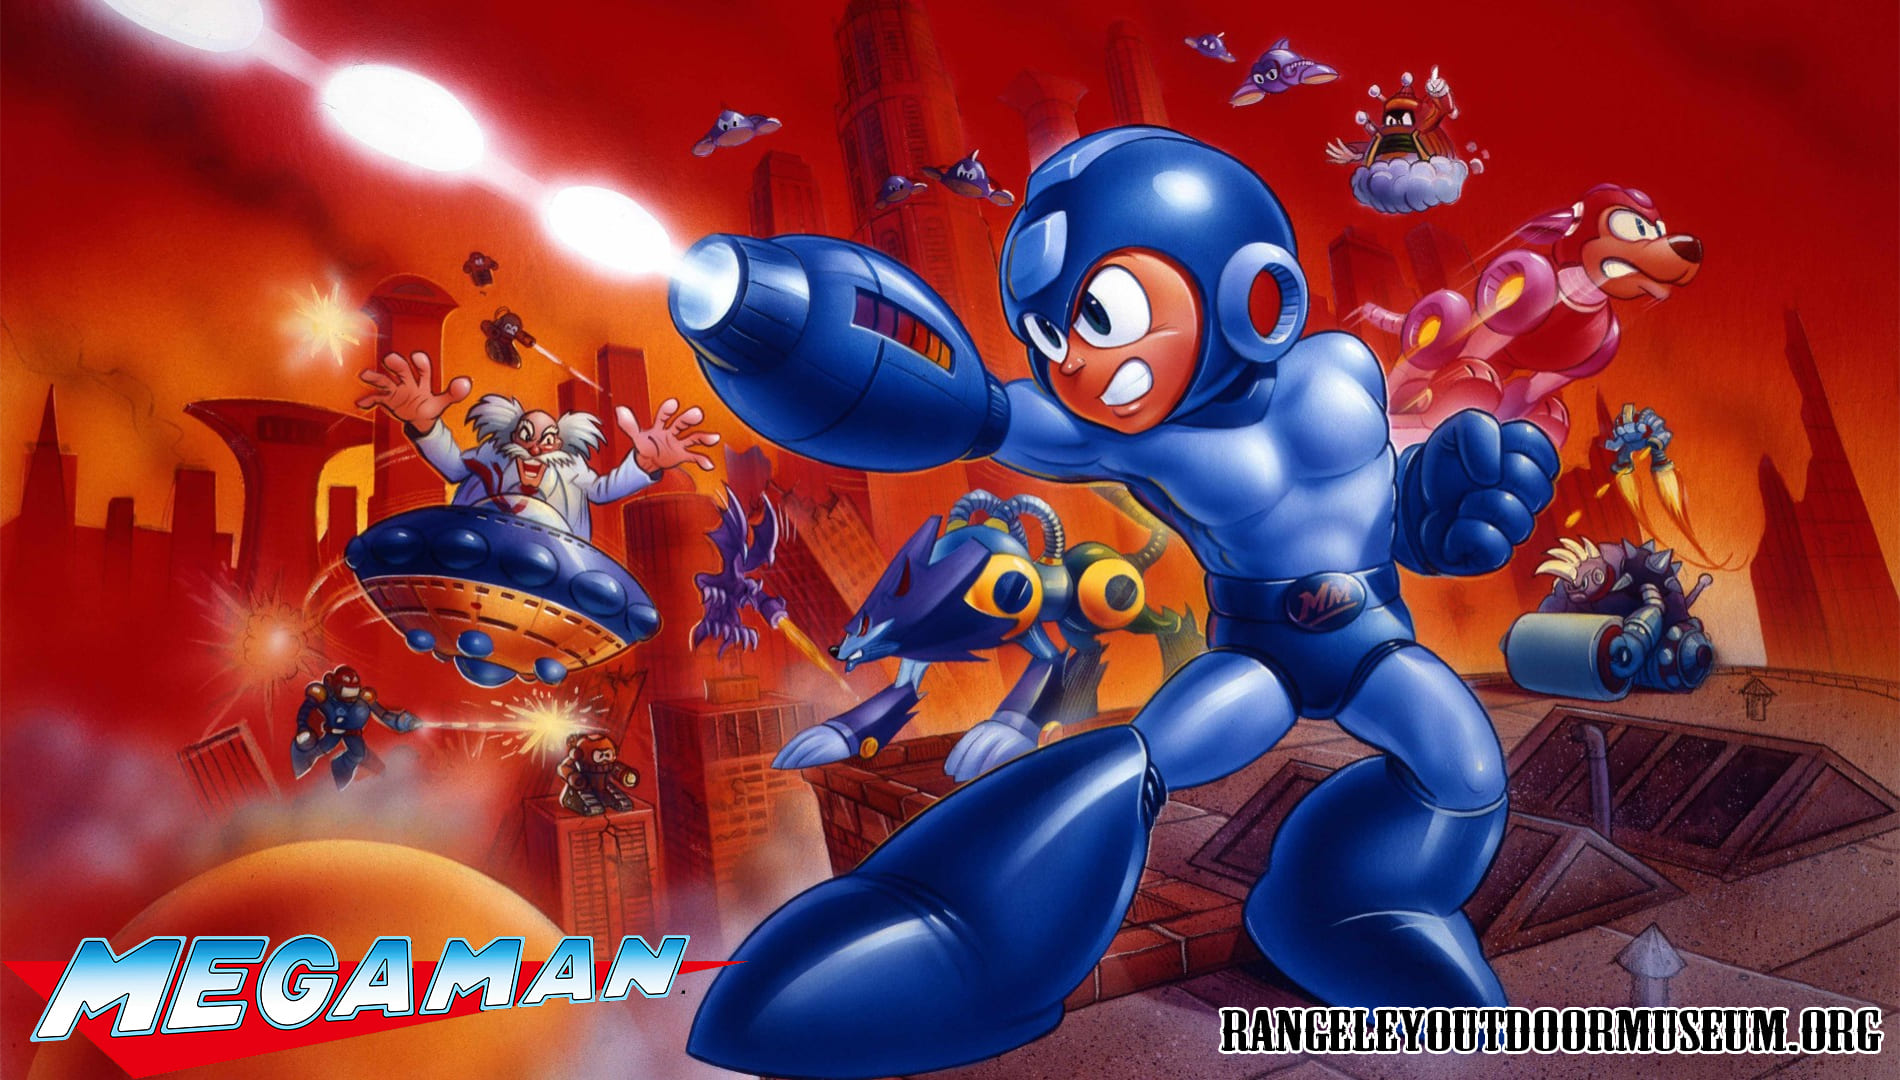 The Legendary Legacy of Mega Man by Capcom